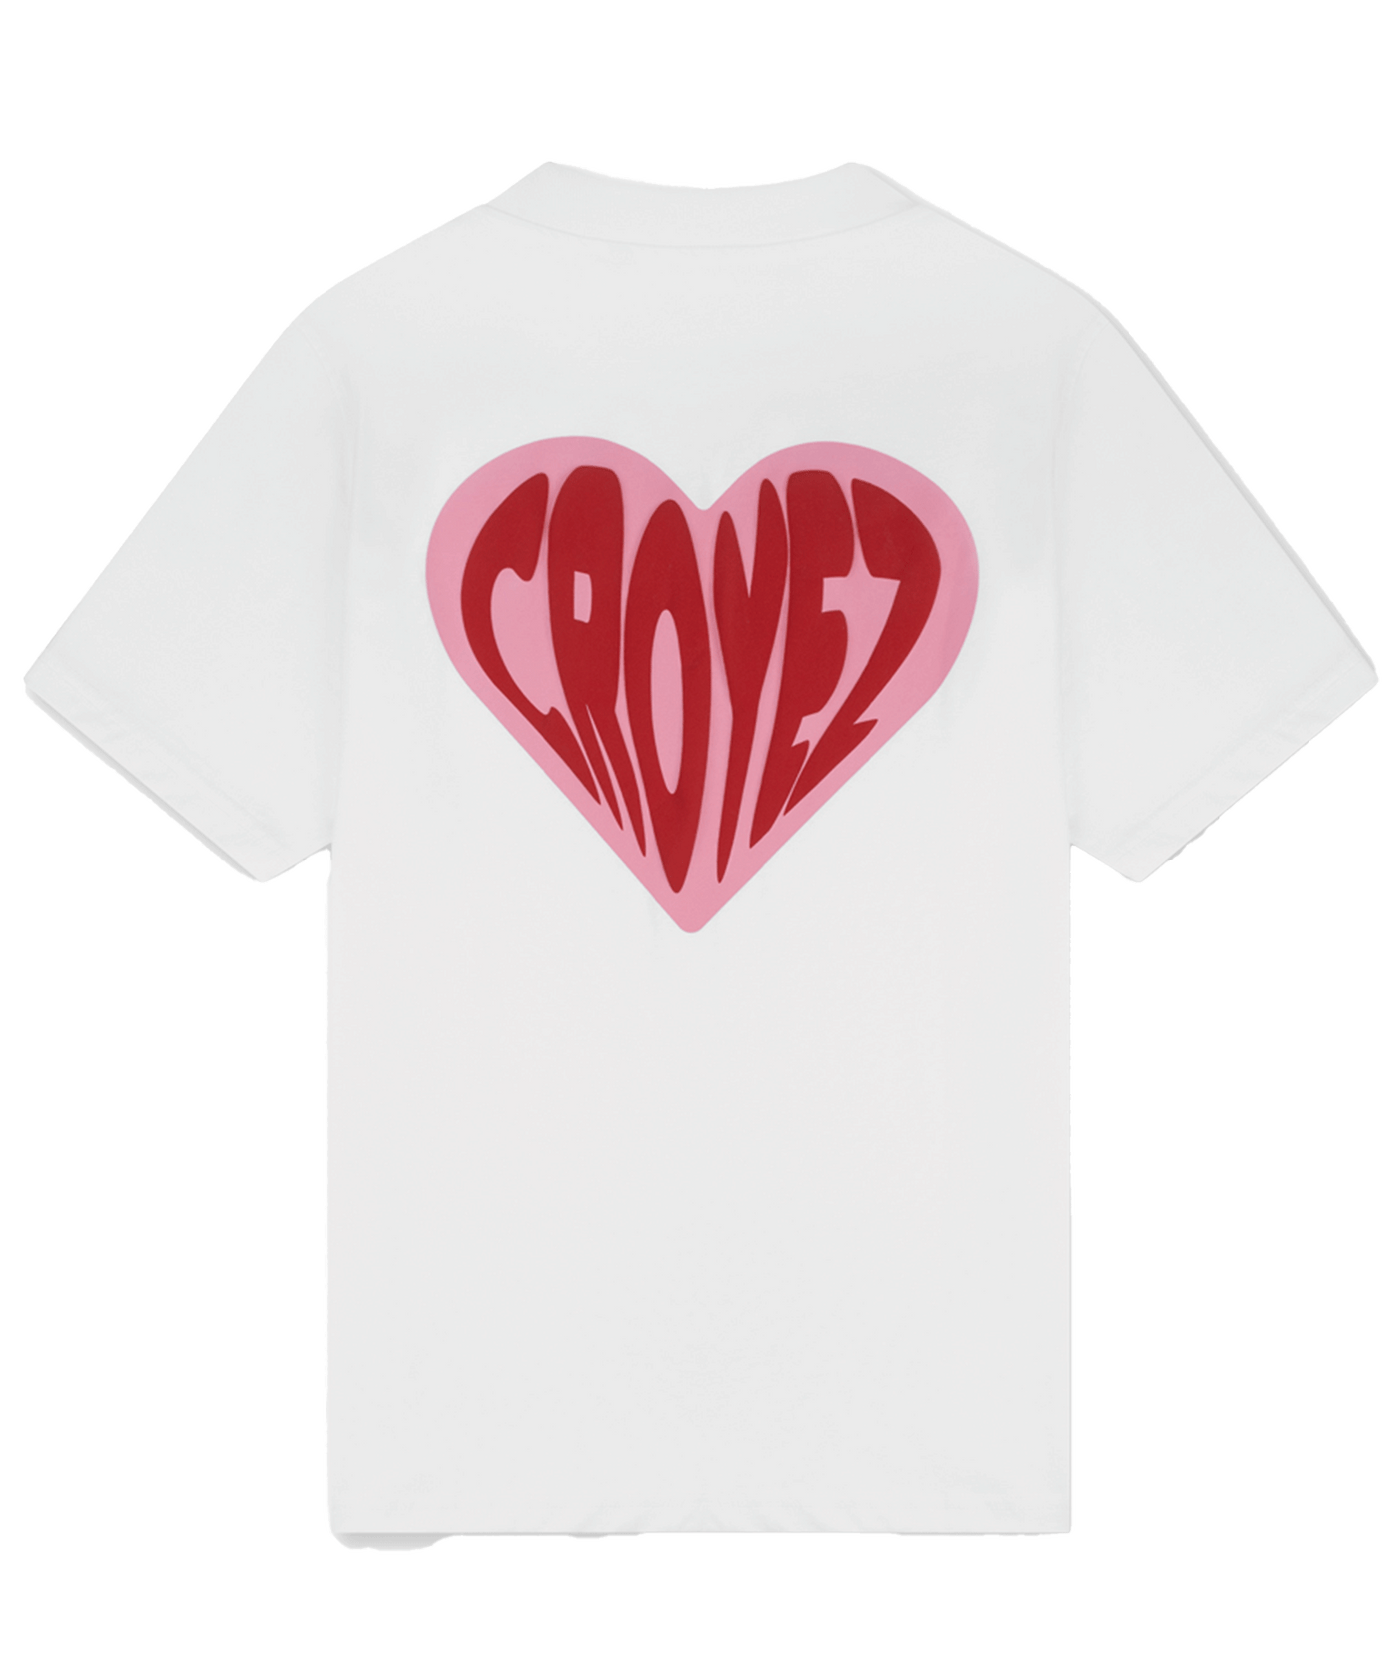 CROYEZ - Puffed Hearth - T-shirt - White/red